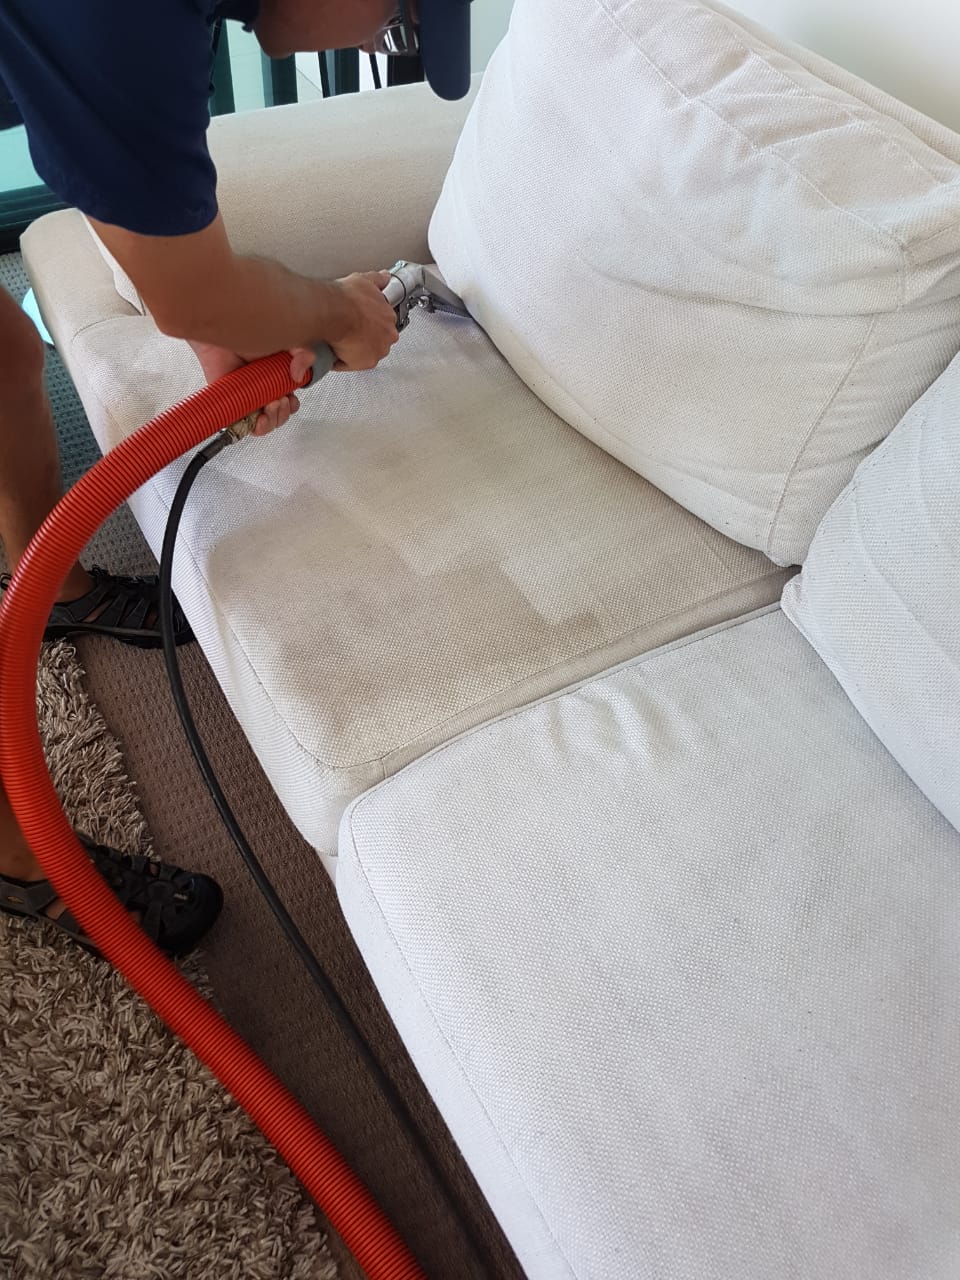 Quick Carpet Cleaners Gold Coast | laundry | 53/60 Caseys Rd, Hope Island QLD 4212, Australia | 0484312966 OR +61 484 312 966